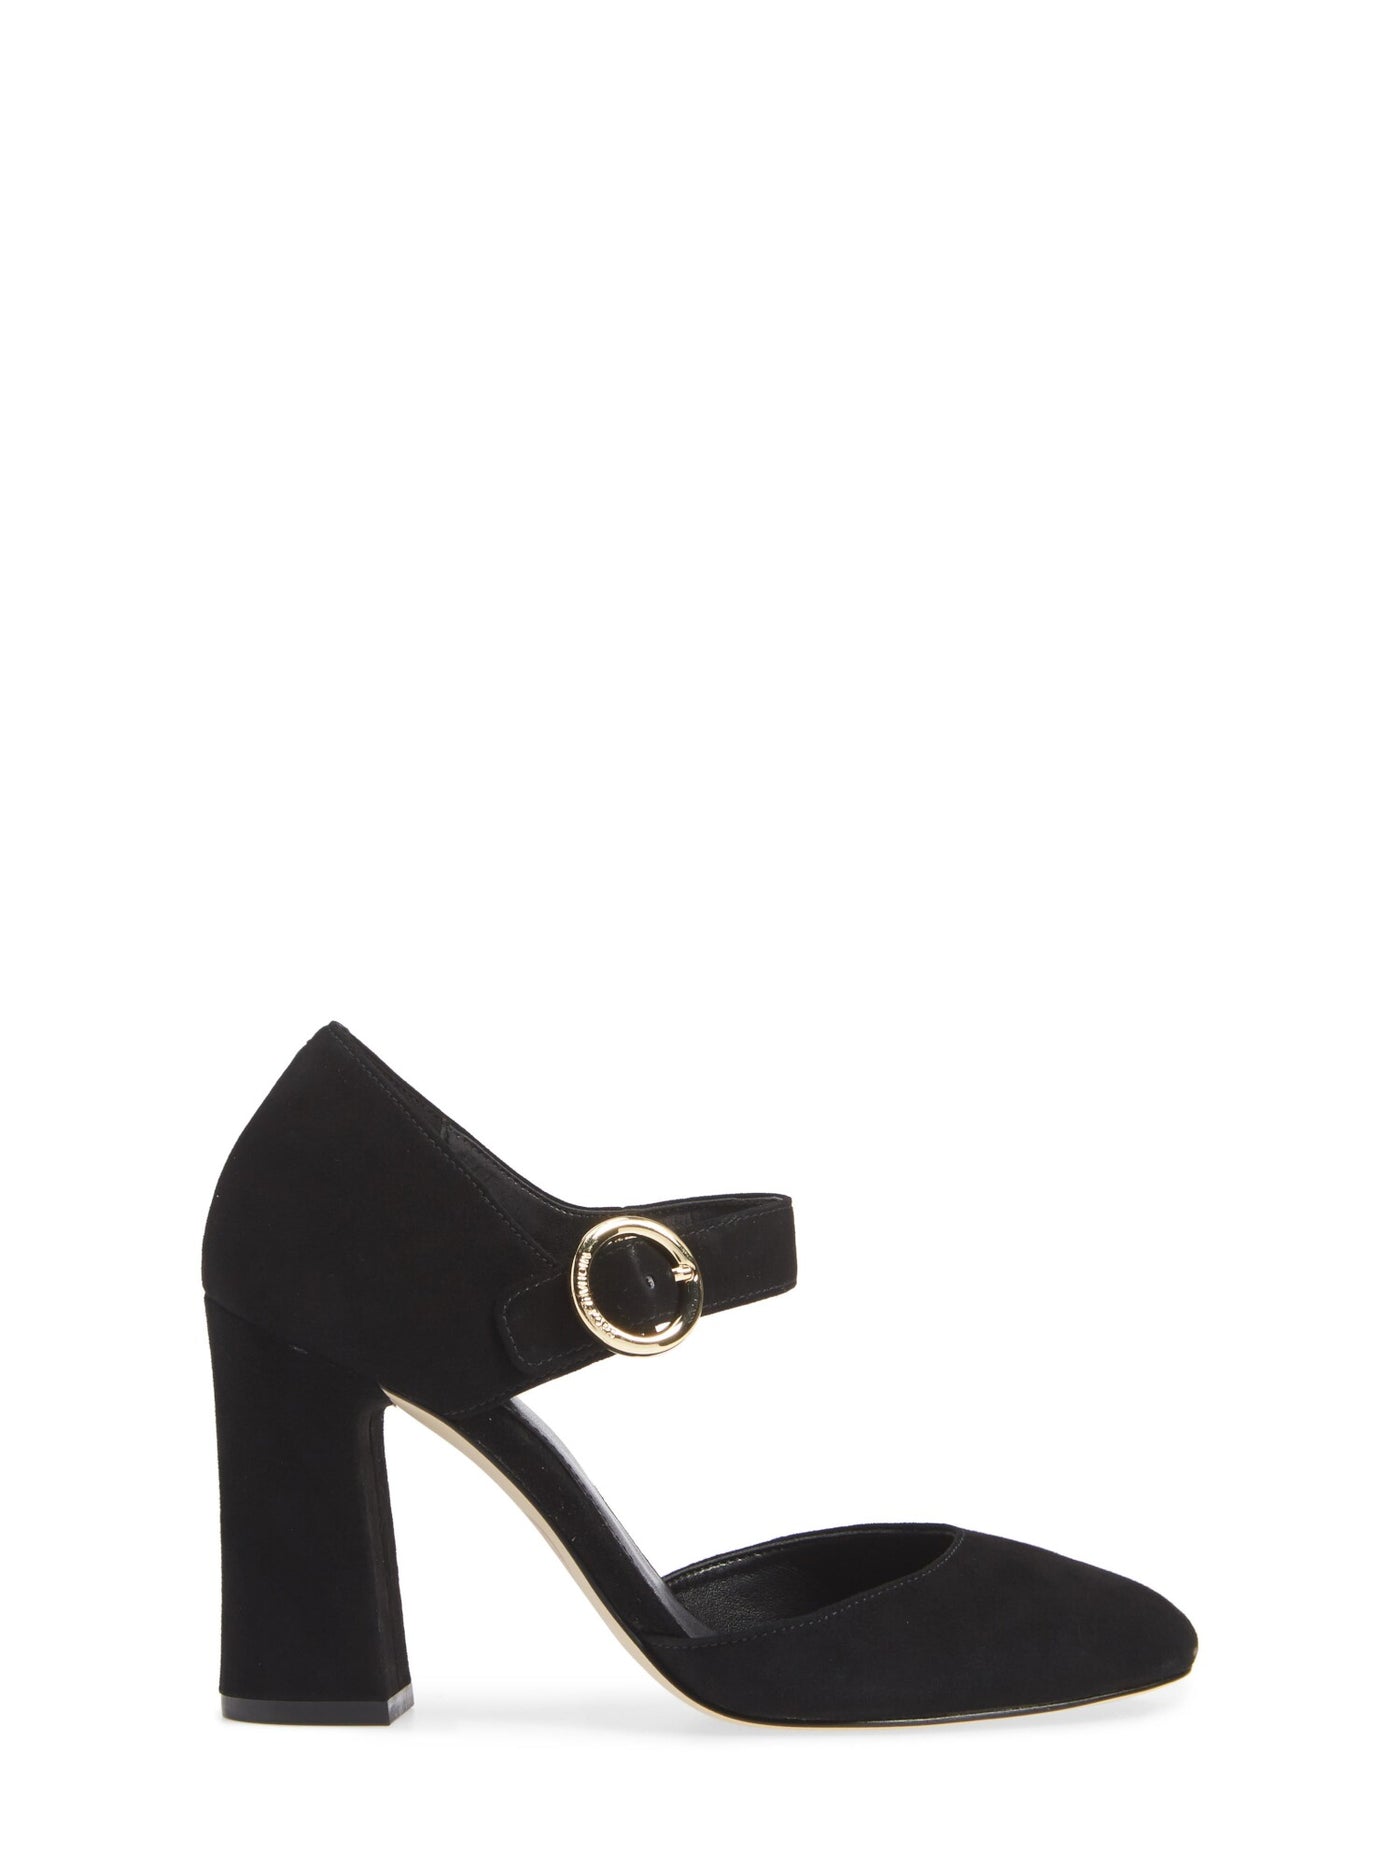 MICHAEL KORS Womens Black Padded Adjustable Alana Round Toe Block Heel Buckle Leather Pumps Shoes 6.5 M